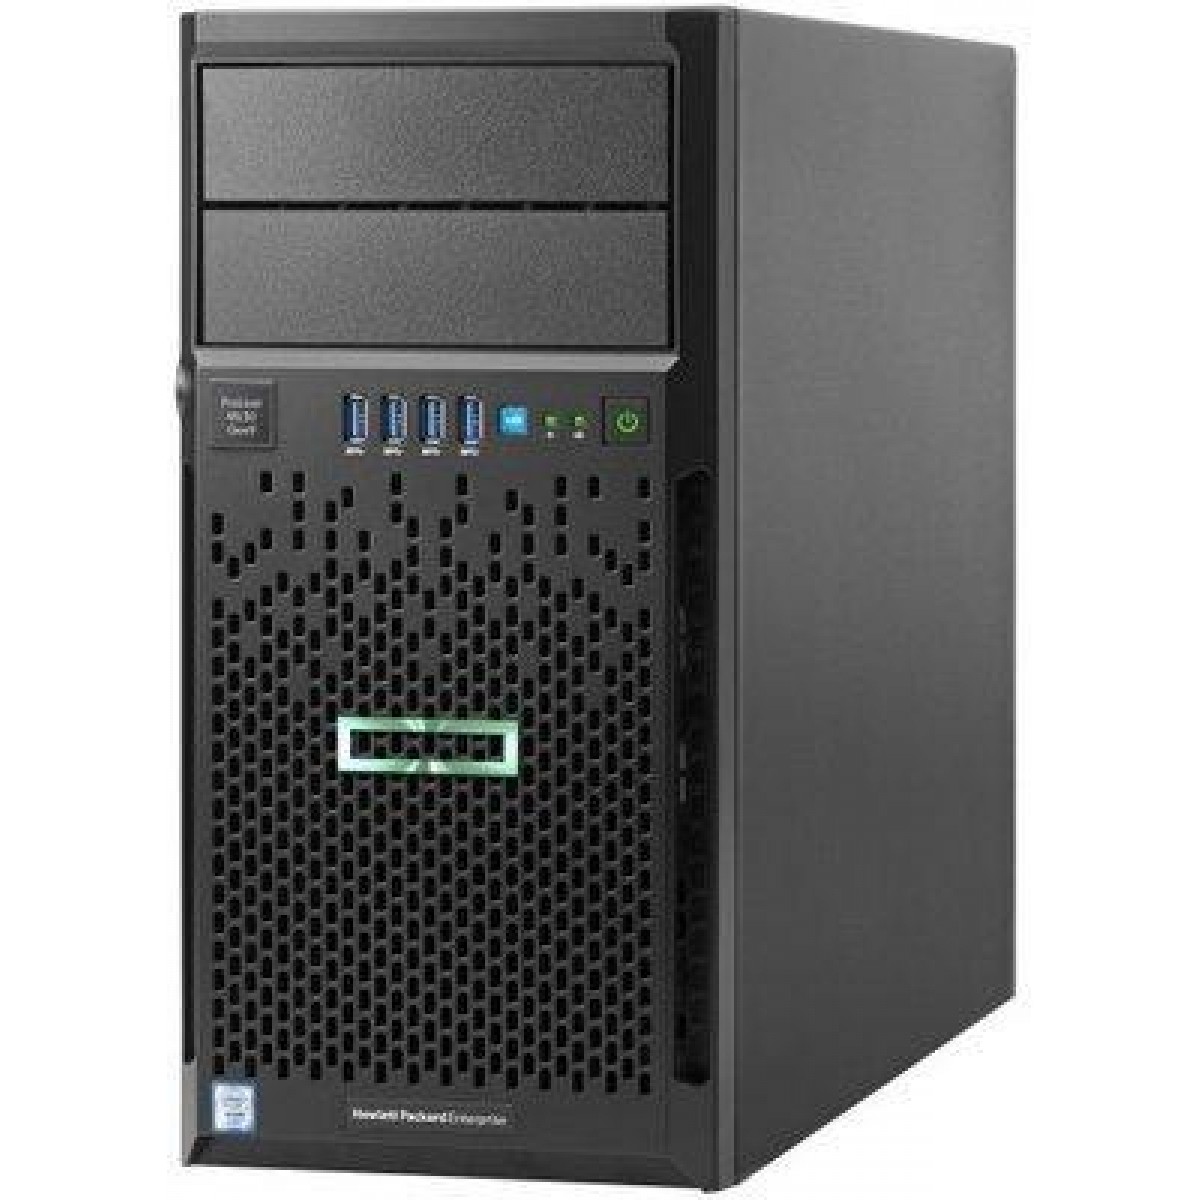 Jual Harga HP ProLiant ML30 Gen9 831069-375 (E3-1220 v5, 8GB) Tower Server